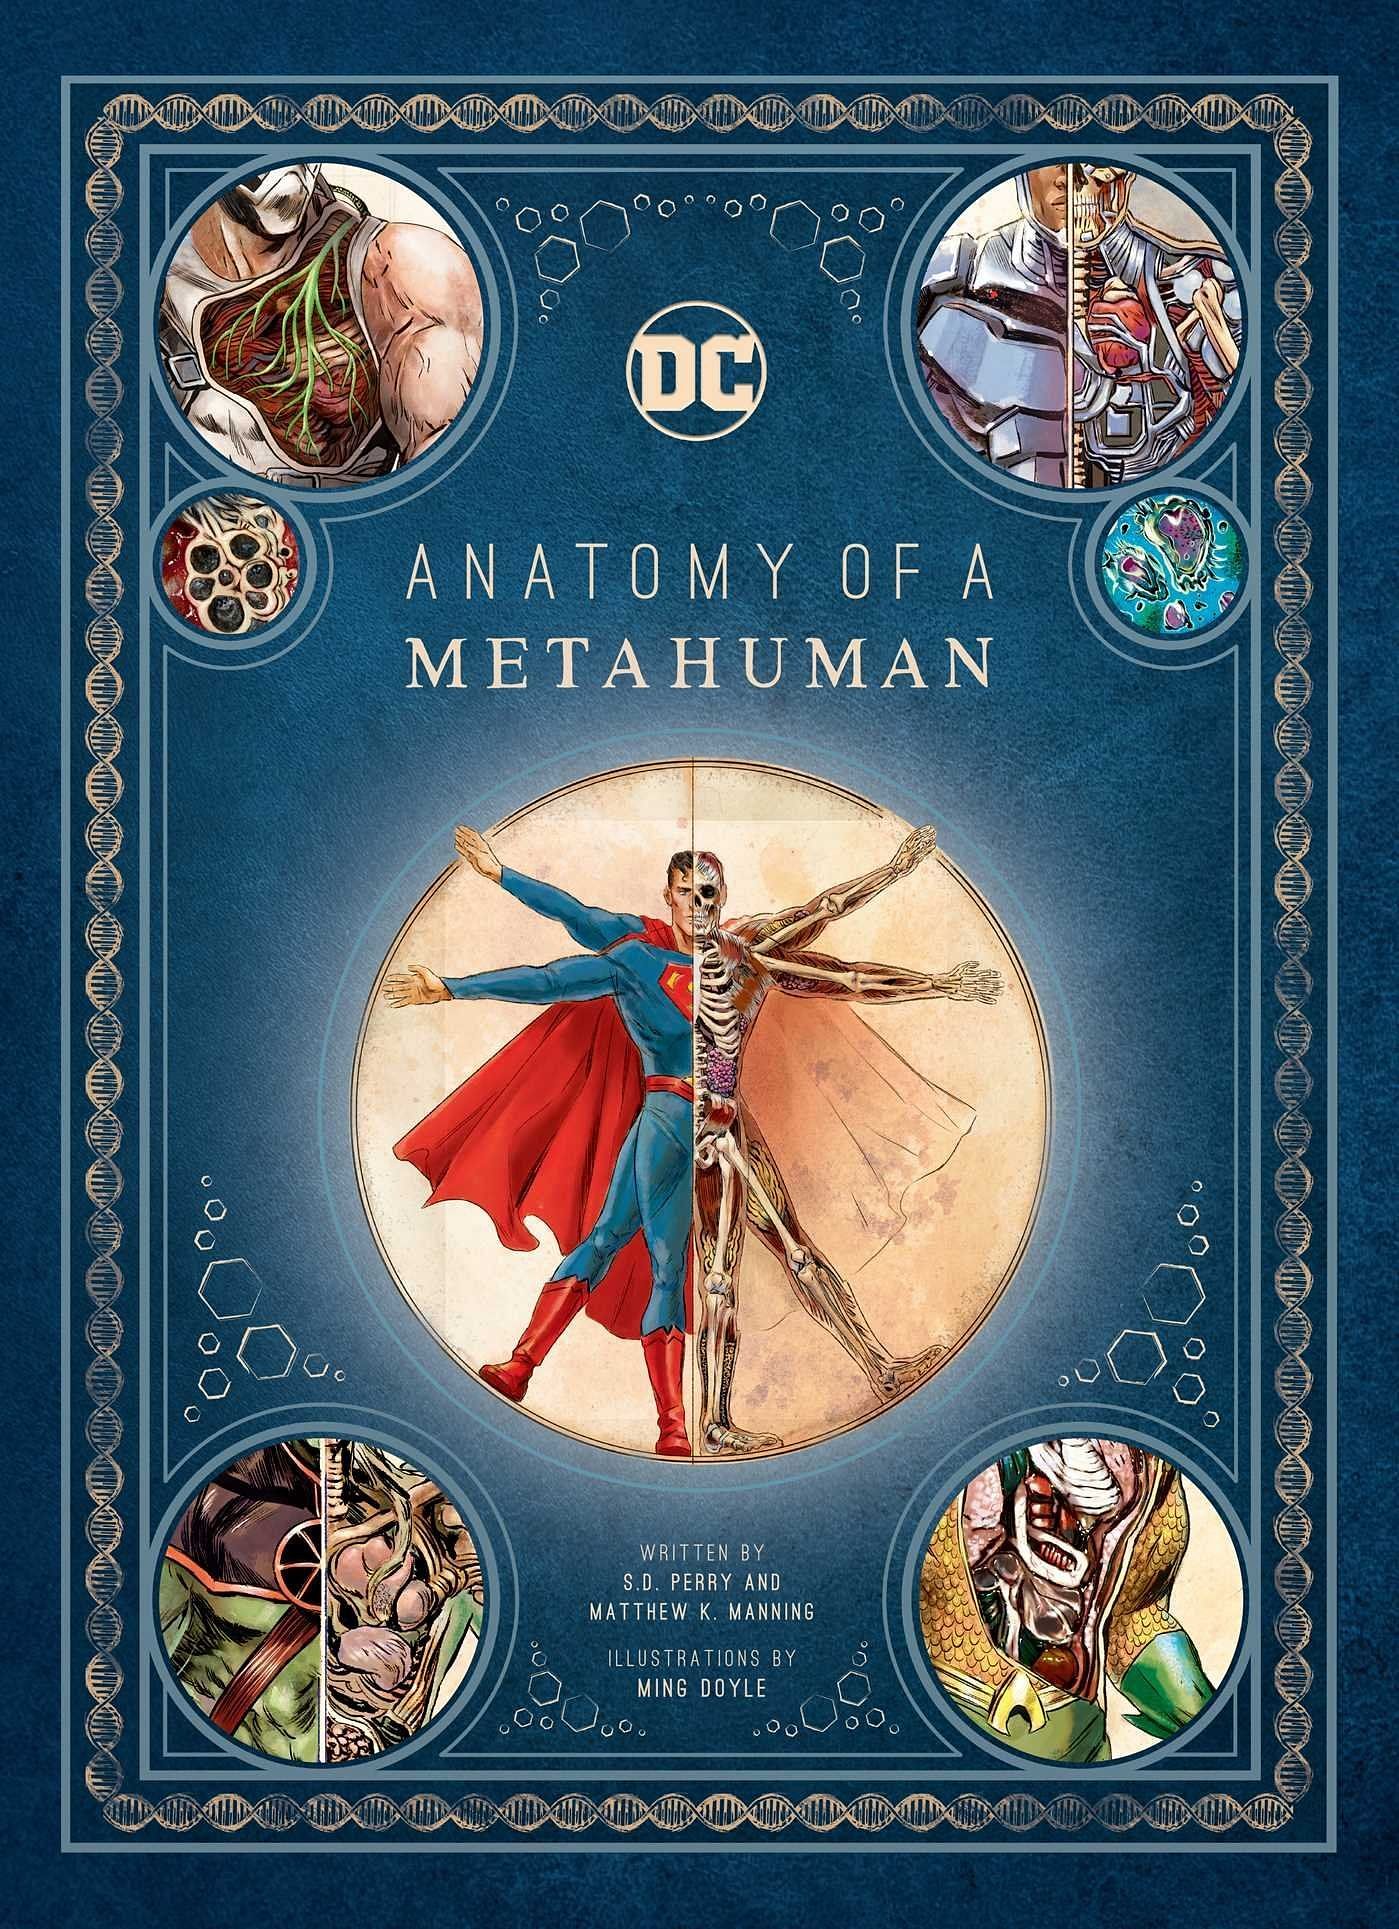 Anatomy of a Metahuman (Image via DC Comics)